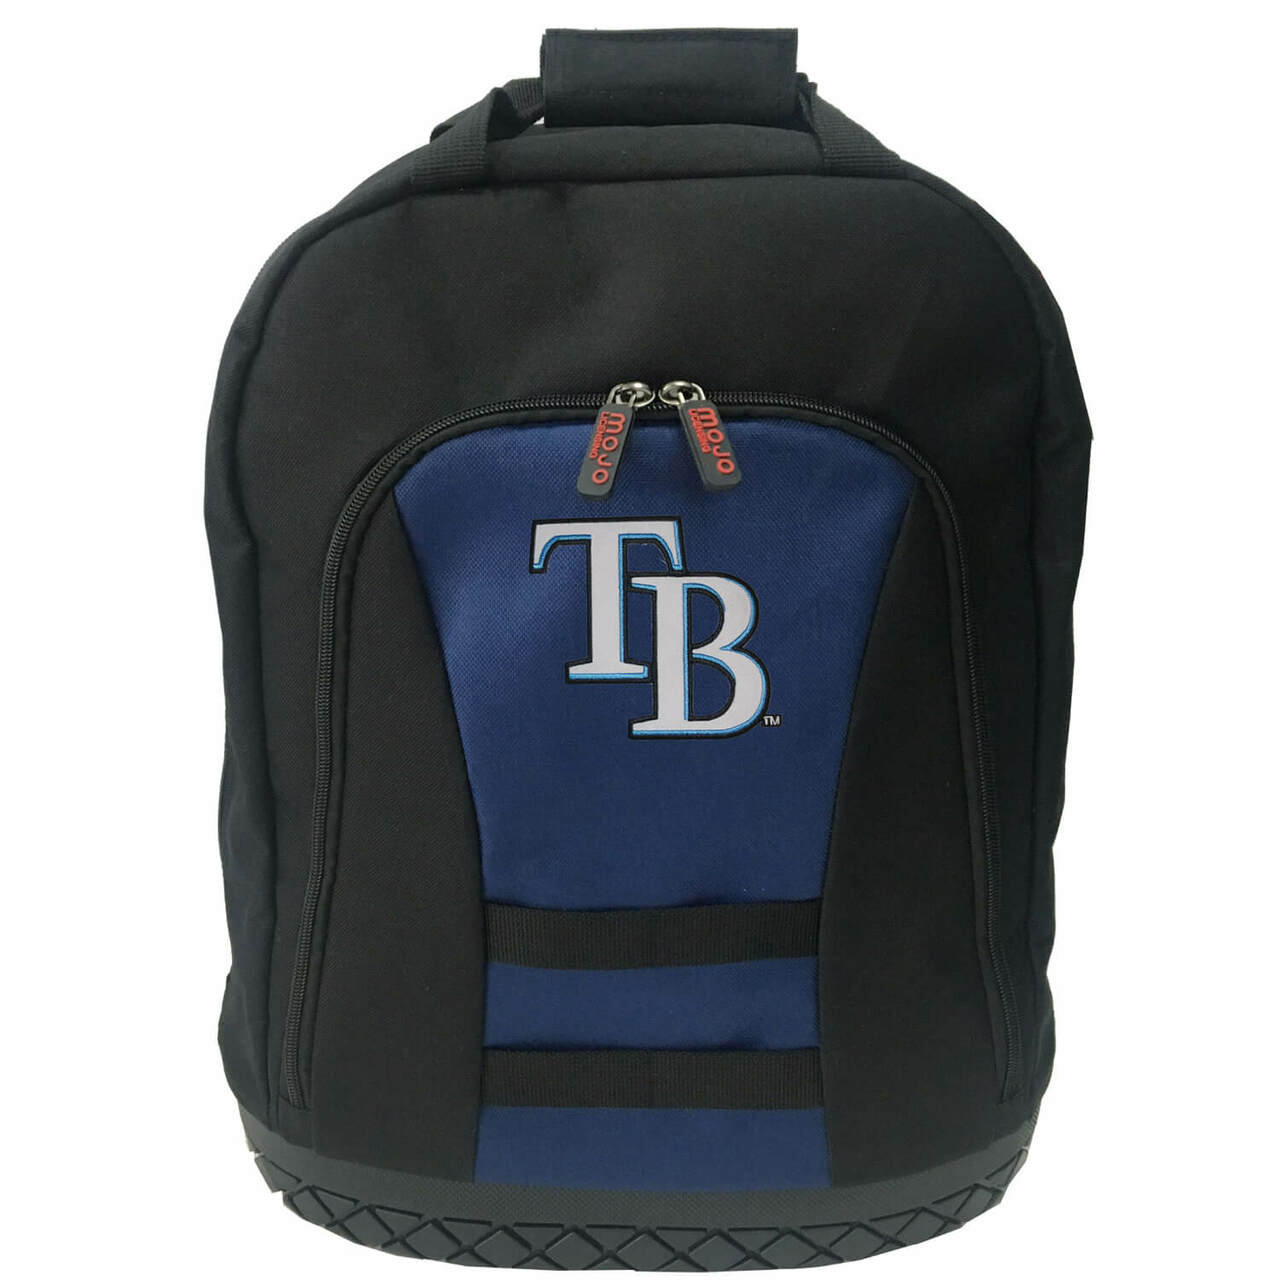 Tampa Bay Rays Tool Bag Backpack